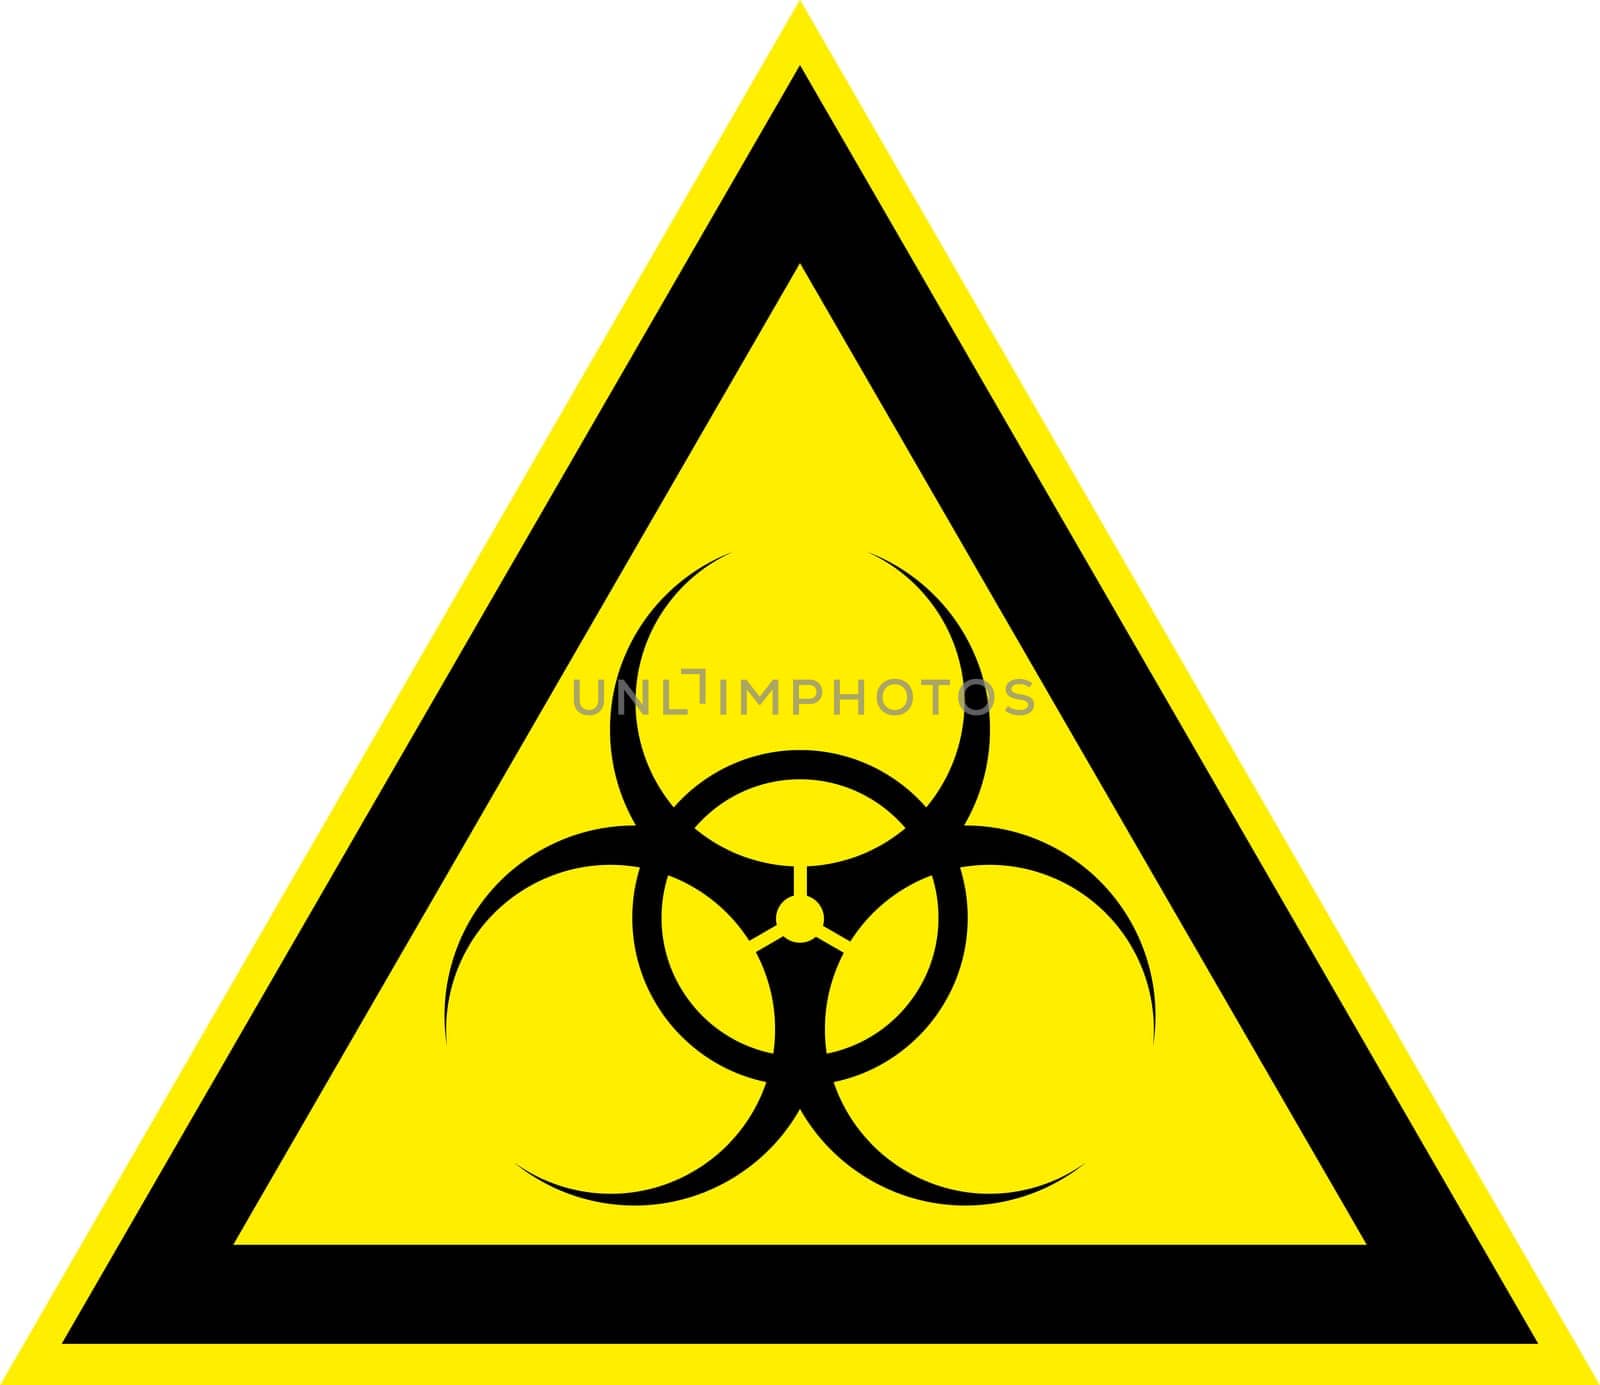 Biohazard Sign biological activity threat alert. Vector illustration